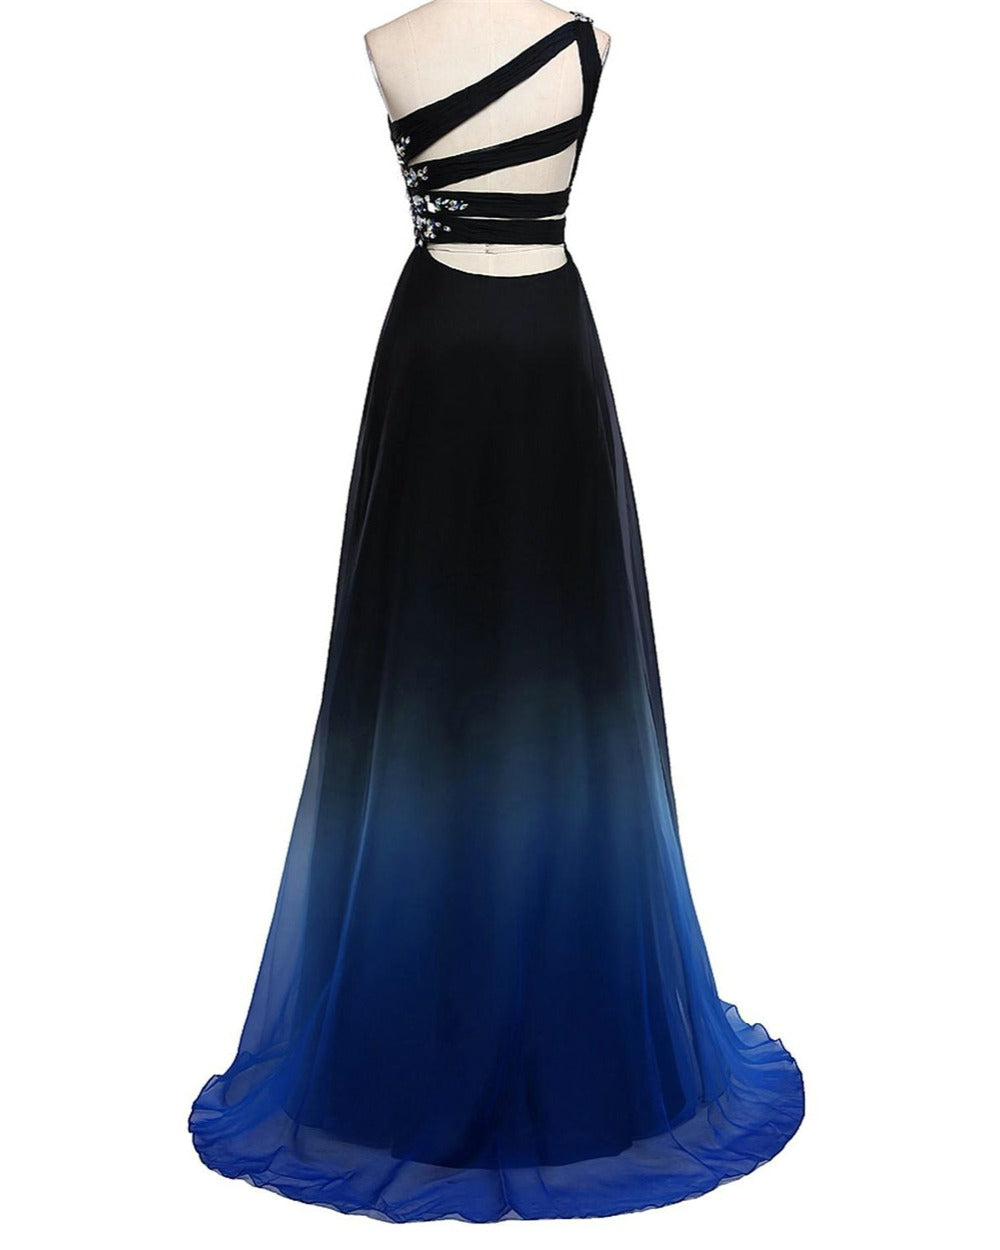 Gradient Blue One Shoulder Beaded Elegant Party Dress, Beautiful Prom Dress, Party Dress 2019